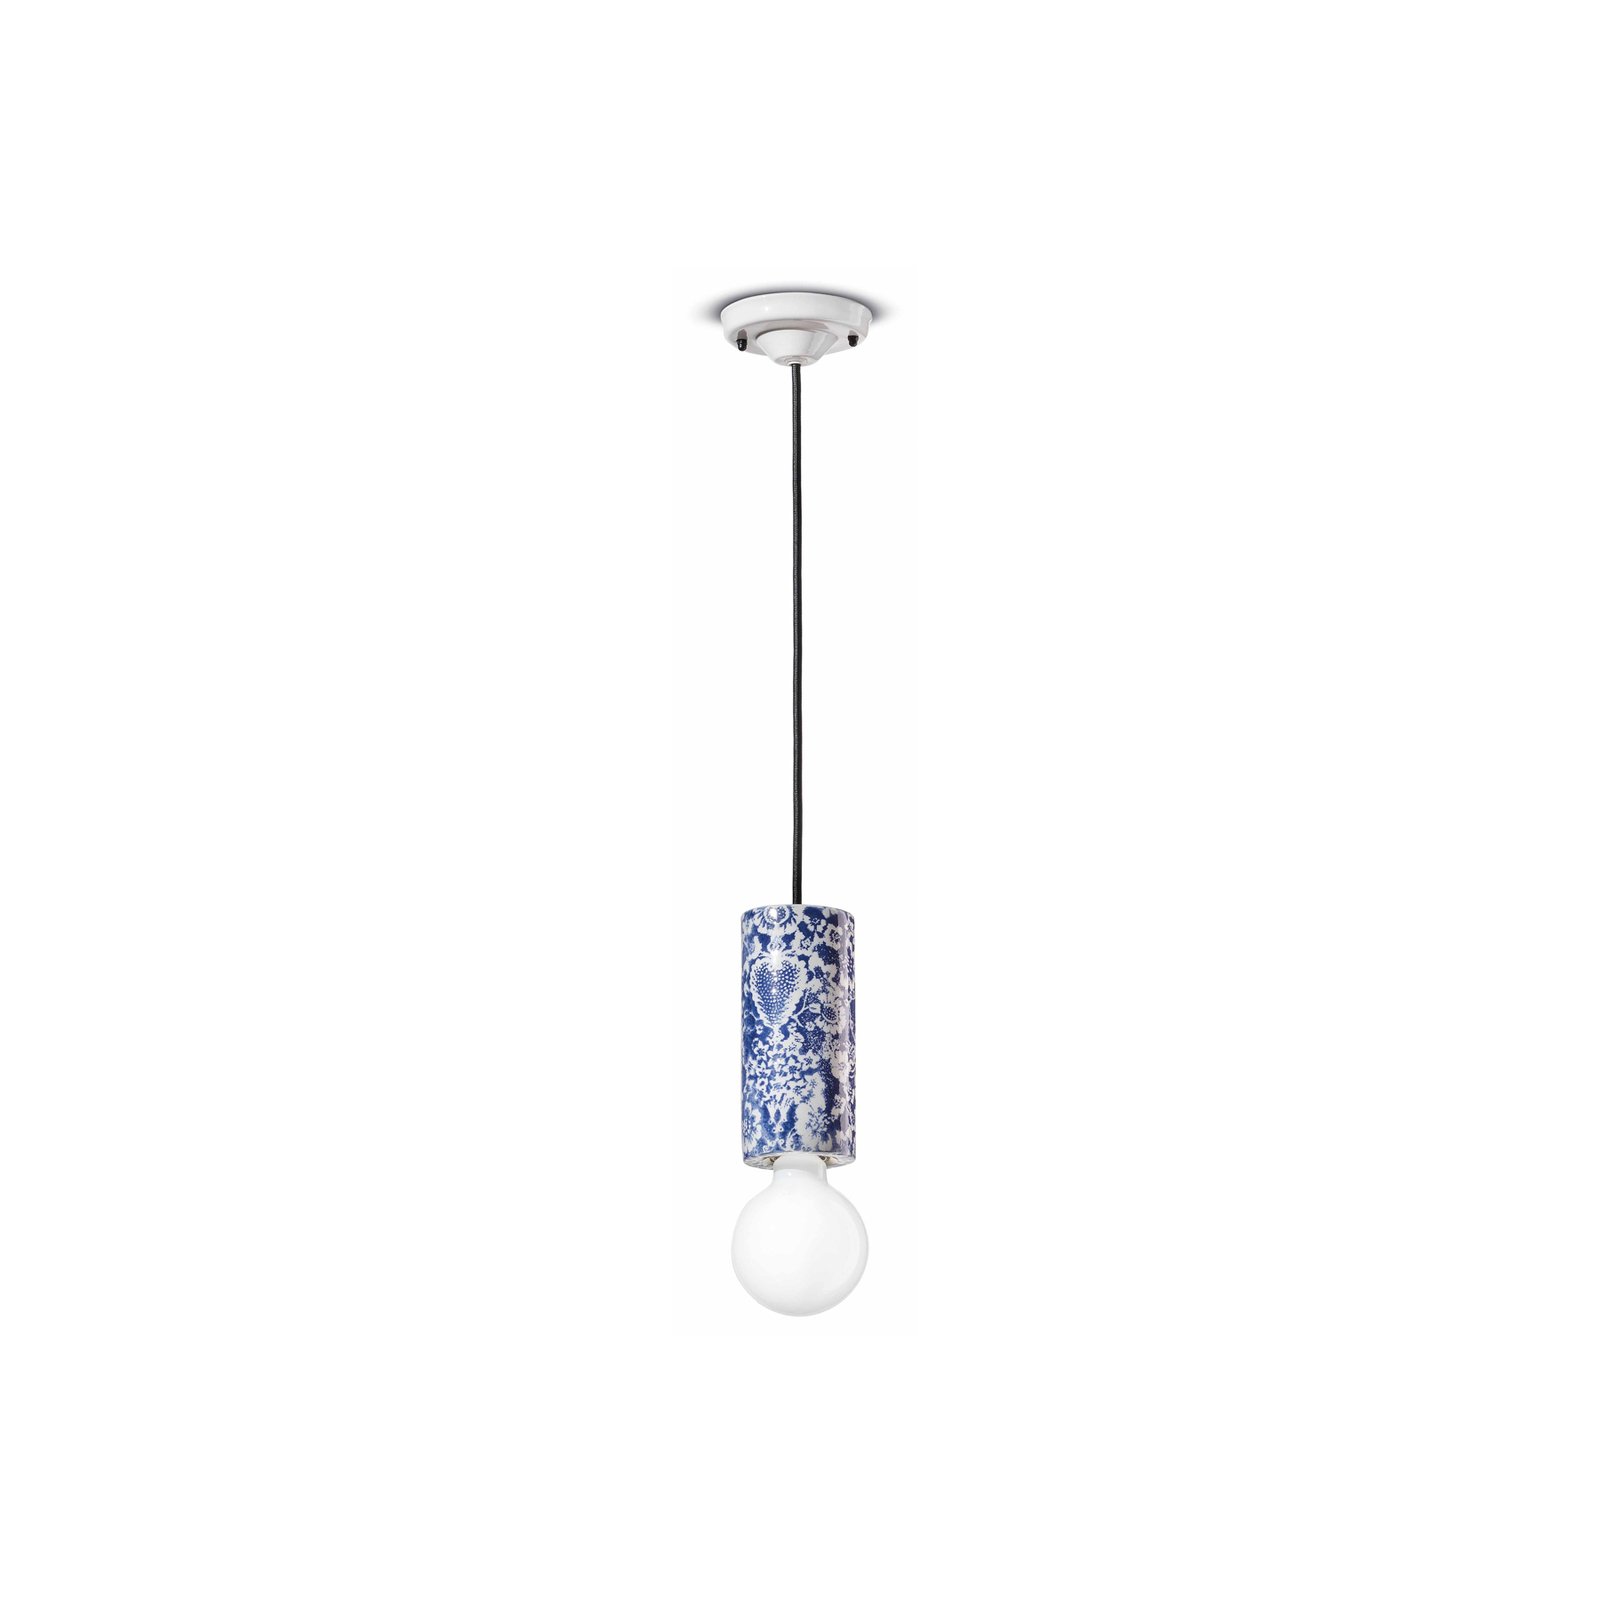 Závěsná lampa PI, květinový vzor Ø 8 cm modrá/bílá